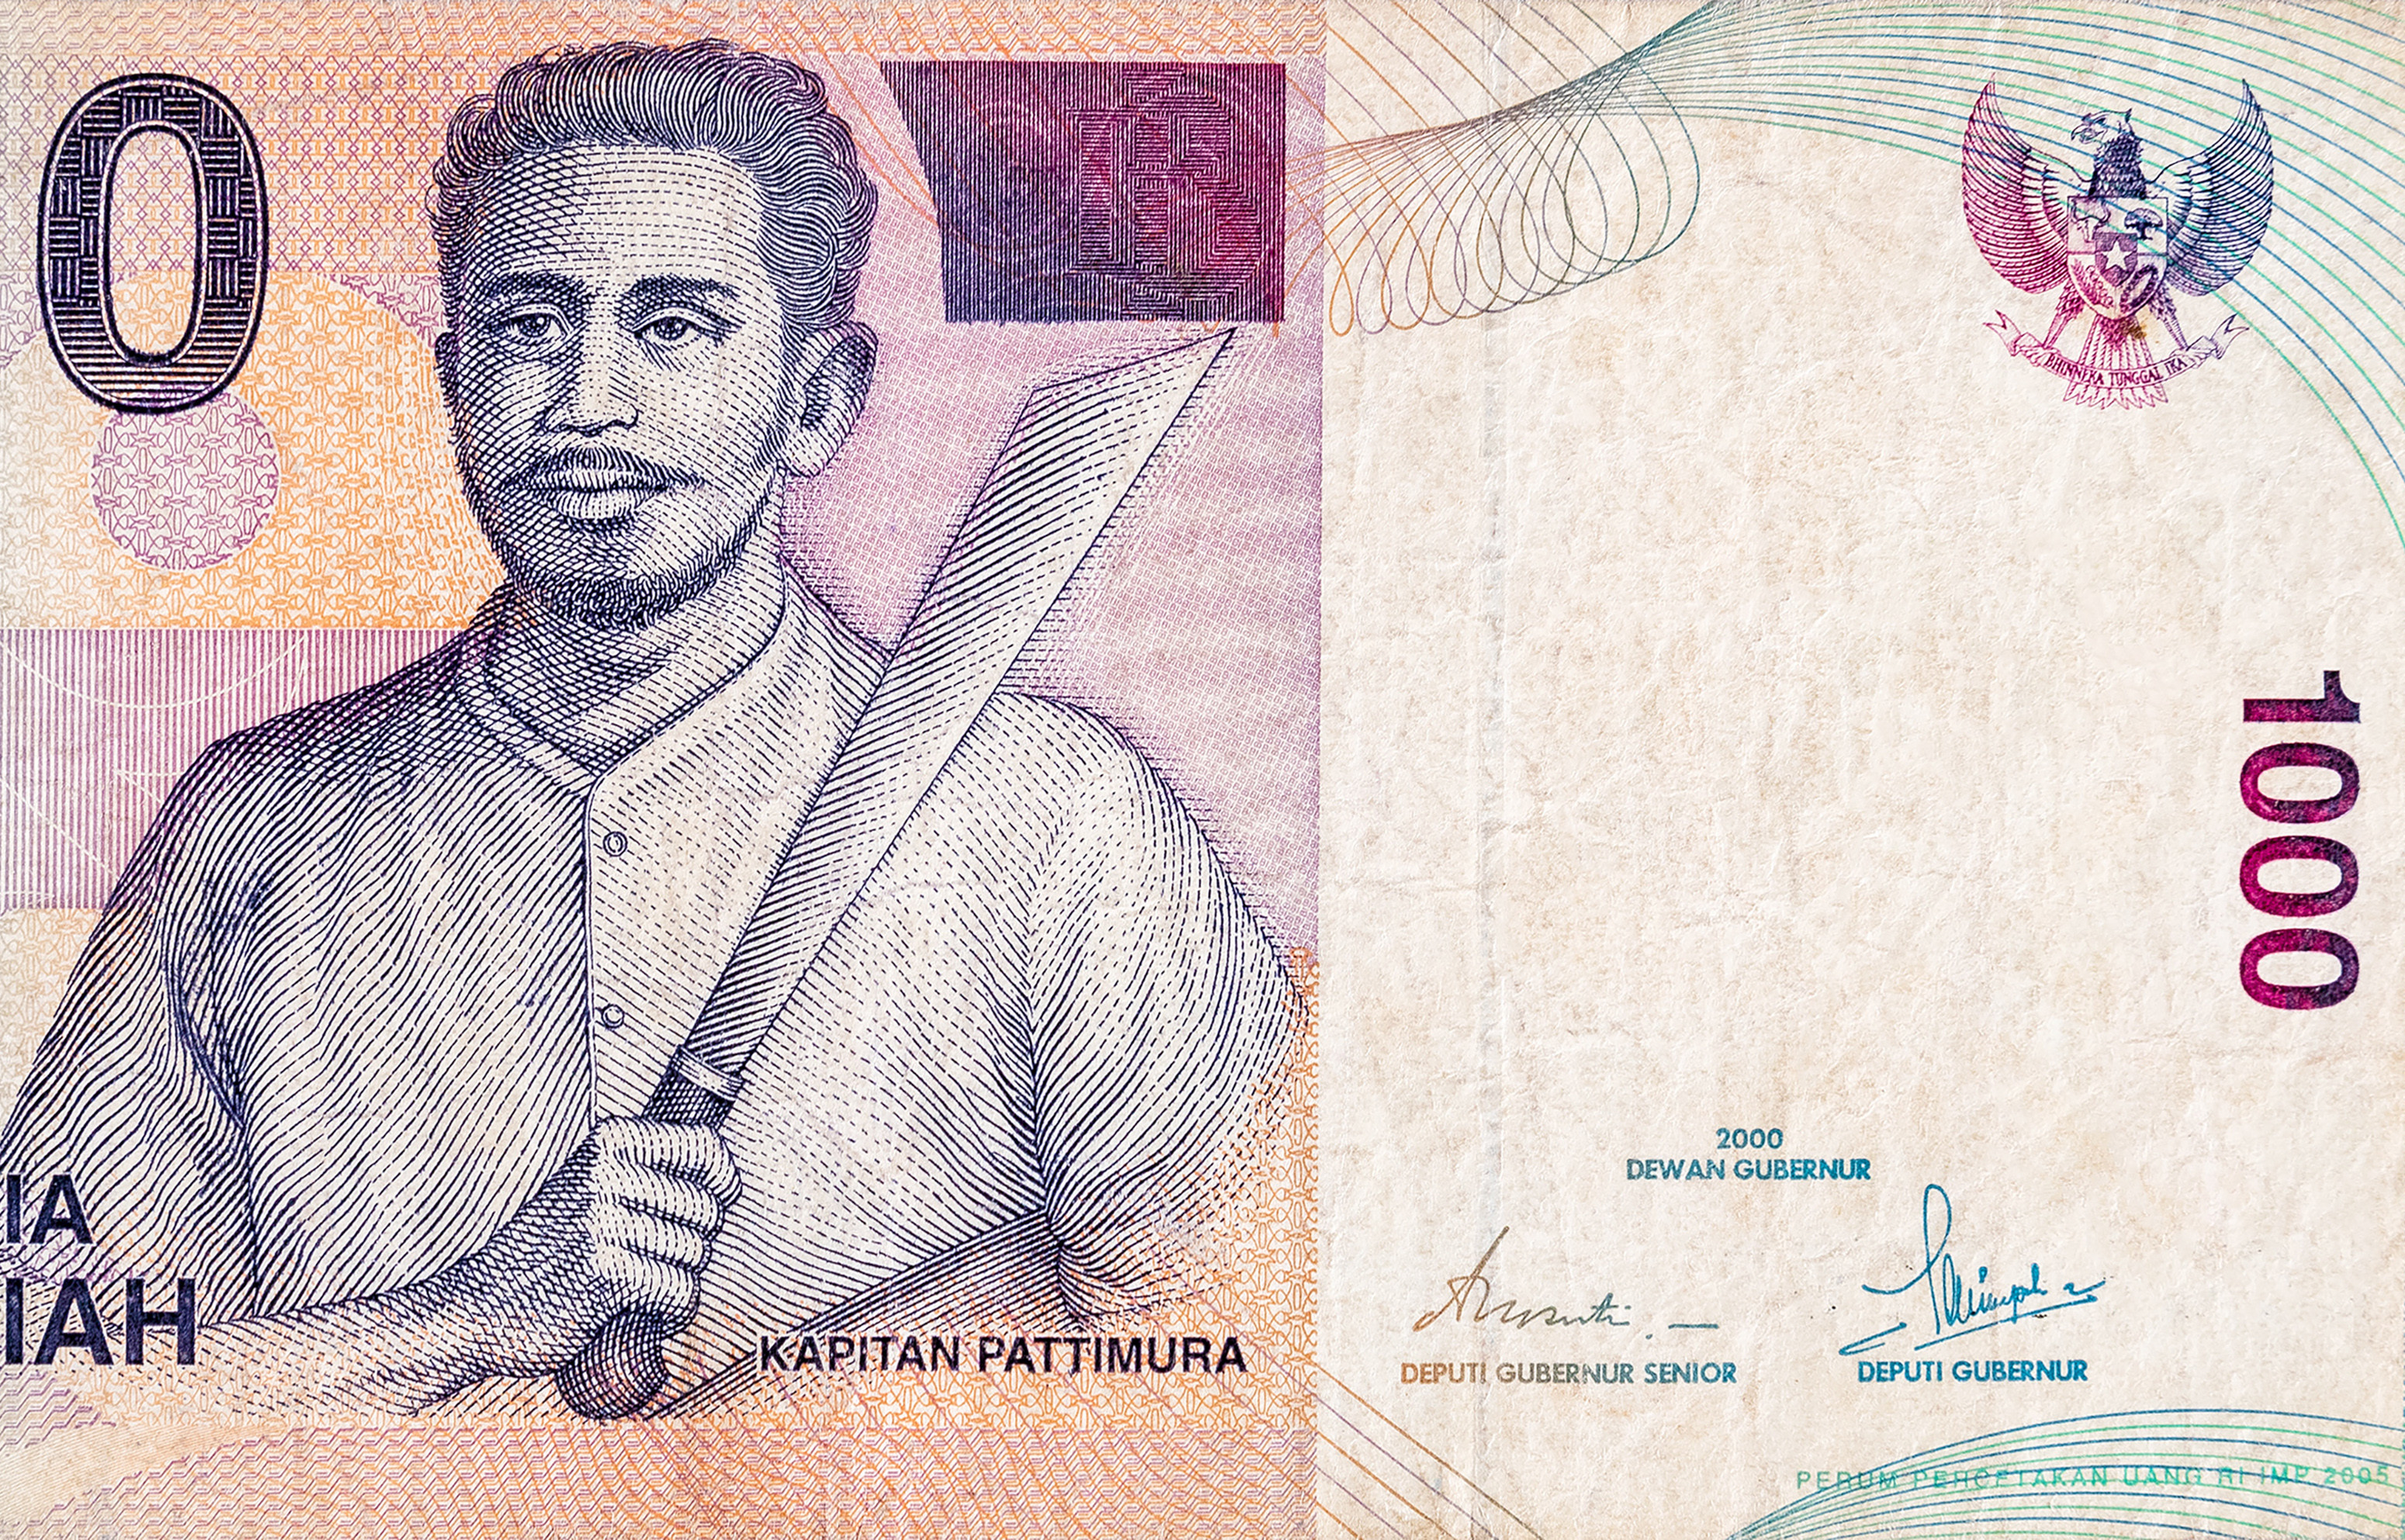 A portrait of Kapitan Pattimura seen on an old 1,000 rupiah banknote. Photo: Shutterstock